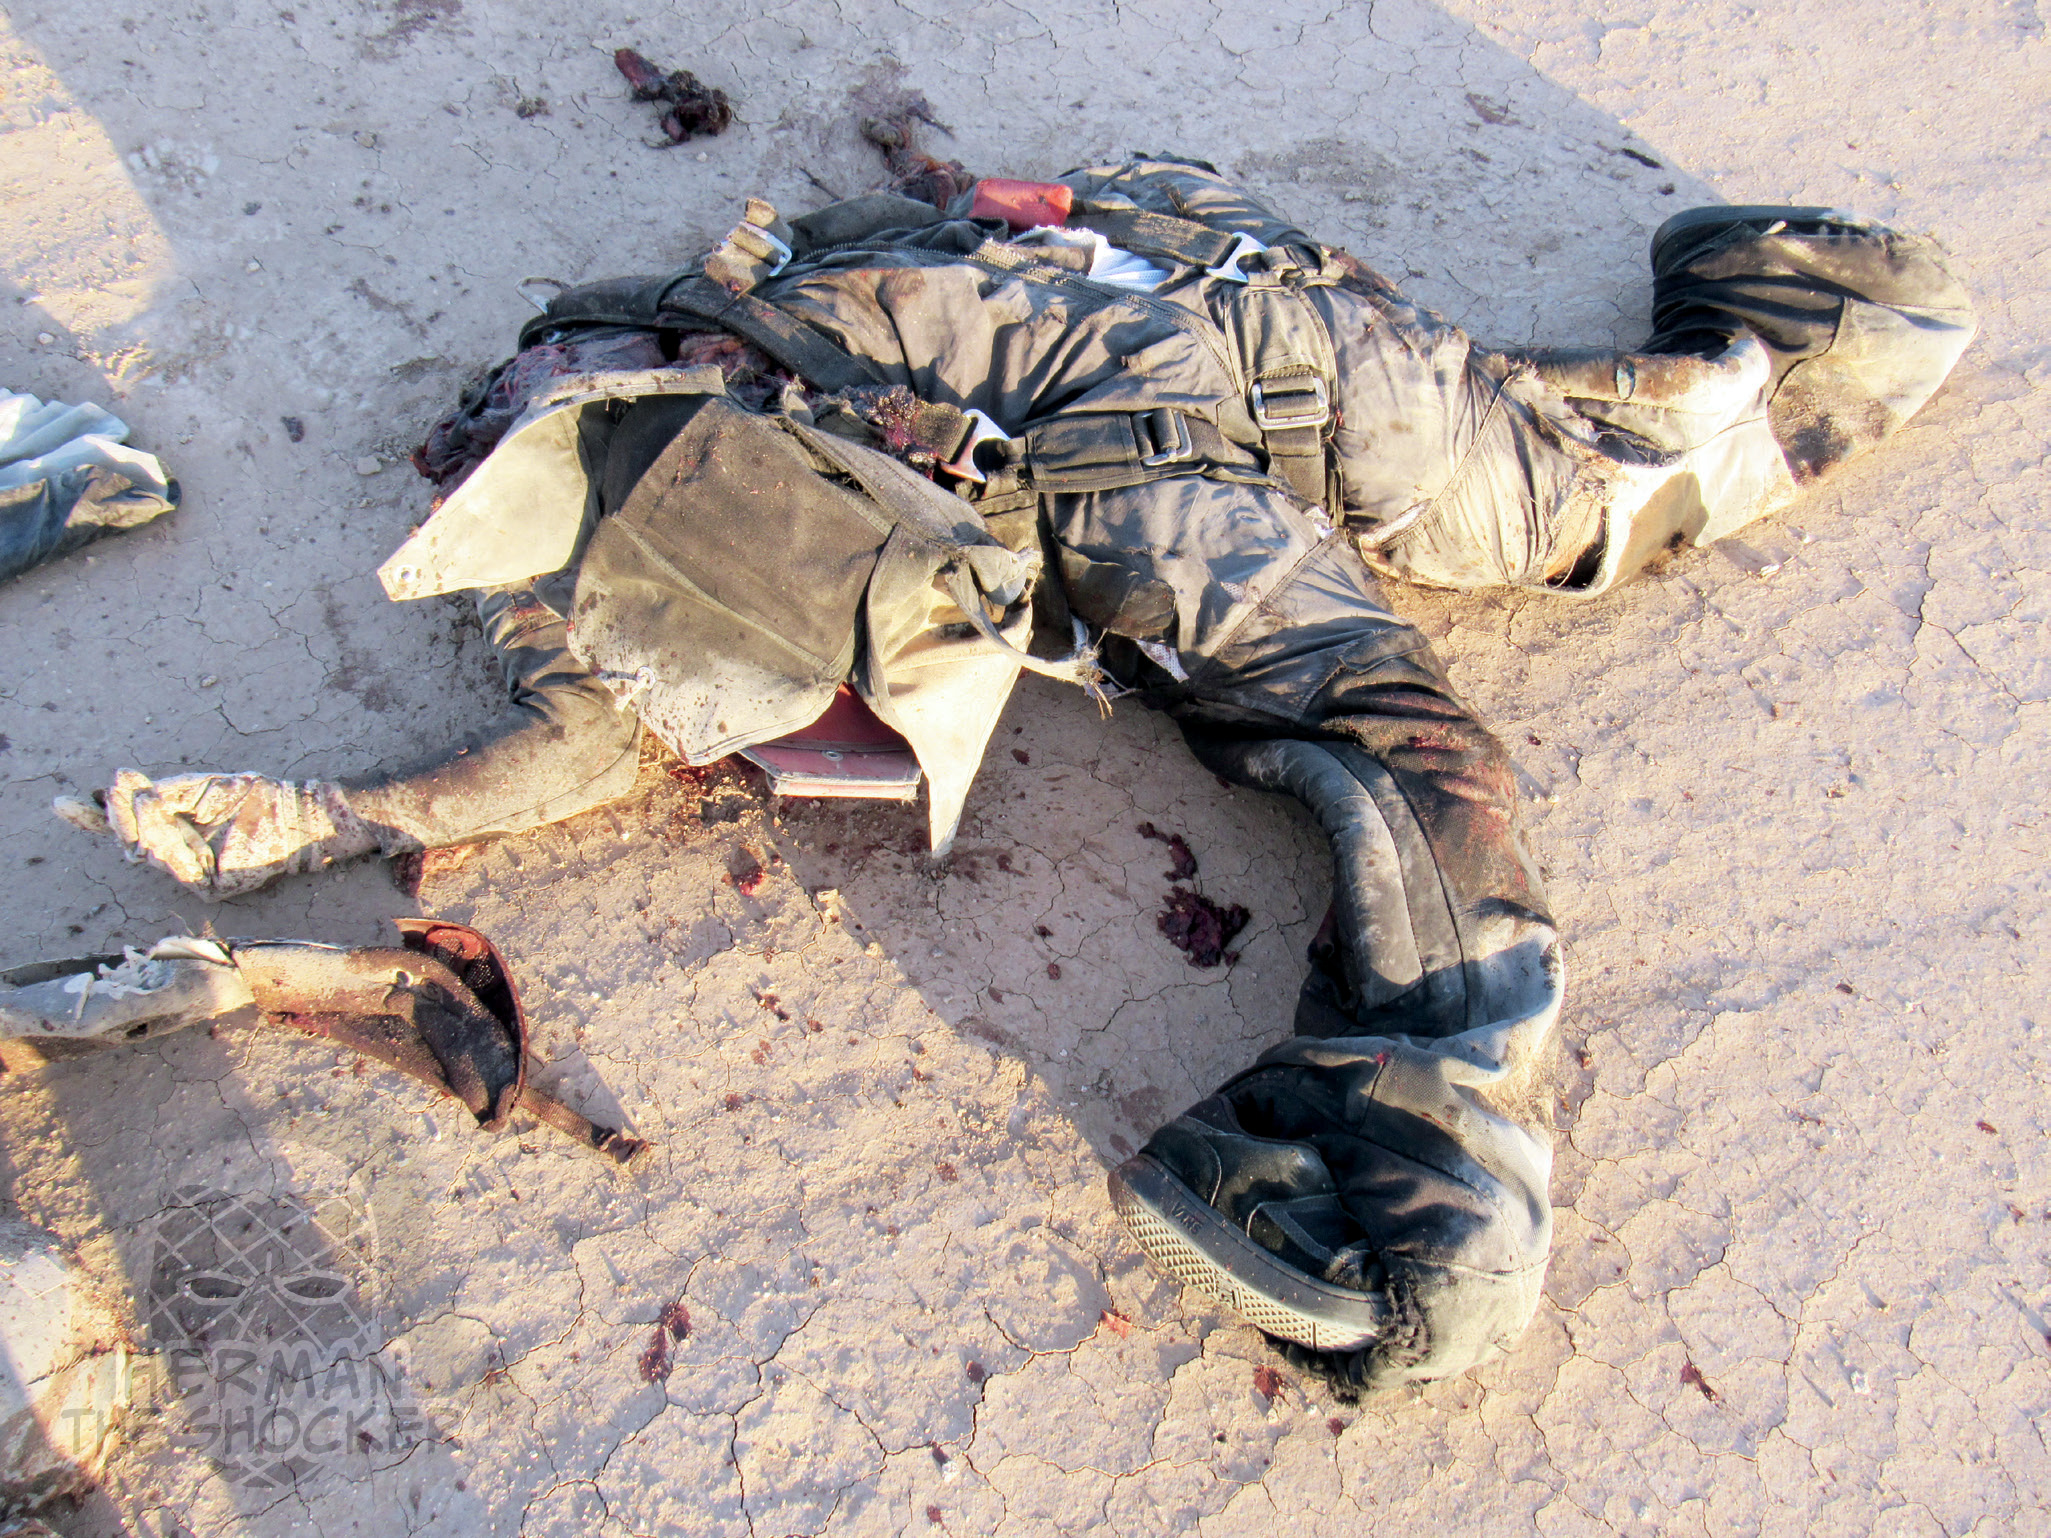 Parachute Death in Southern Arizona